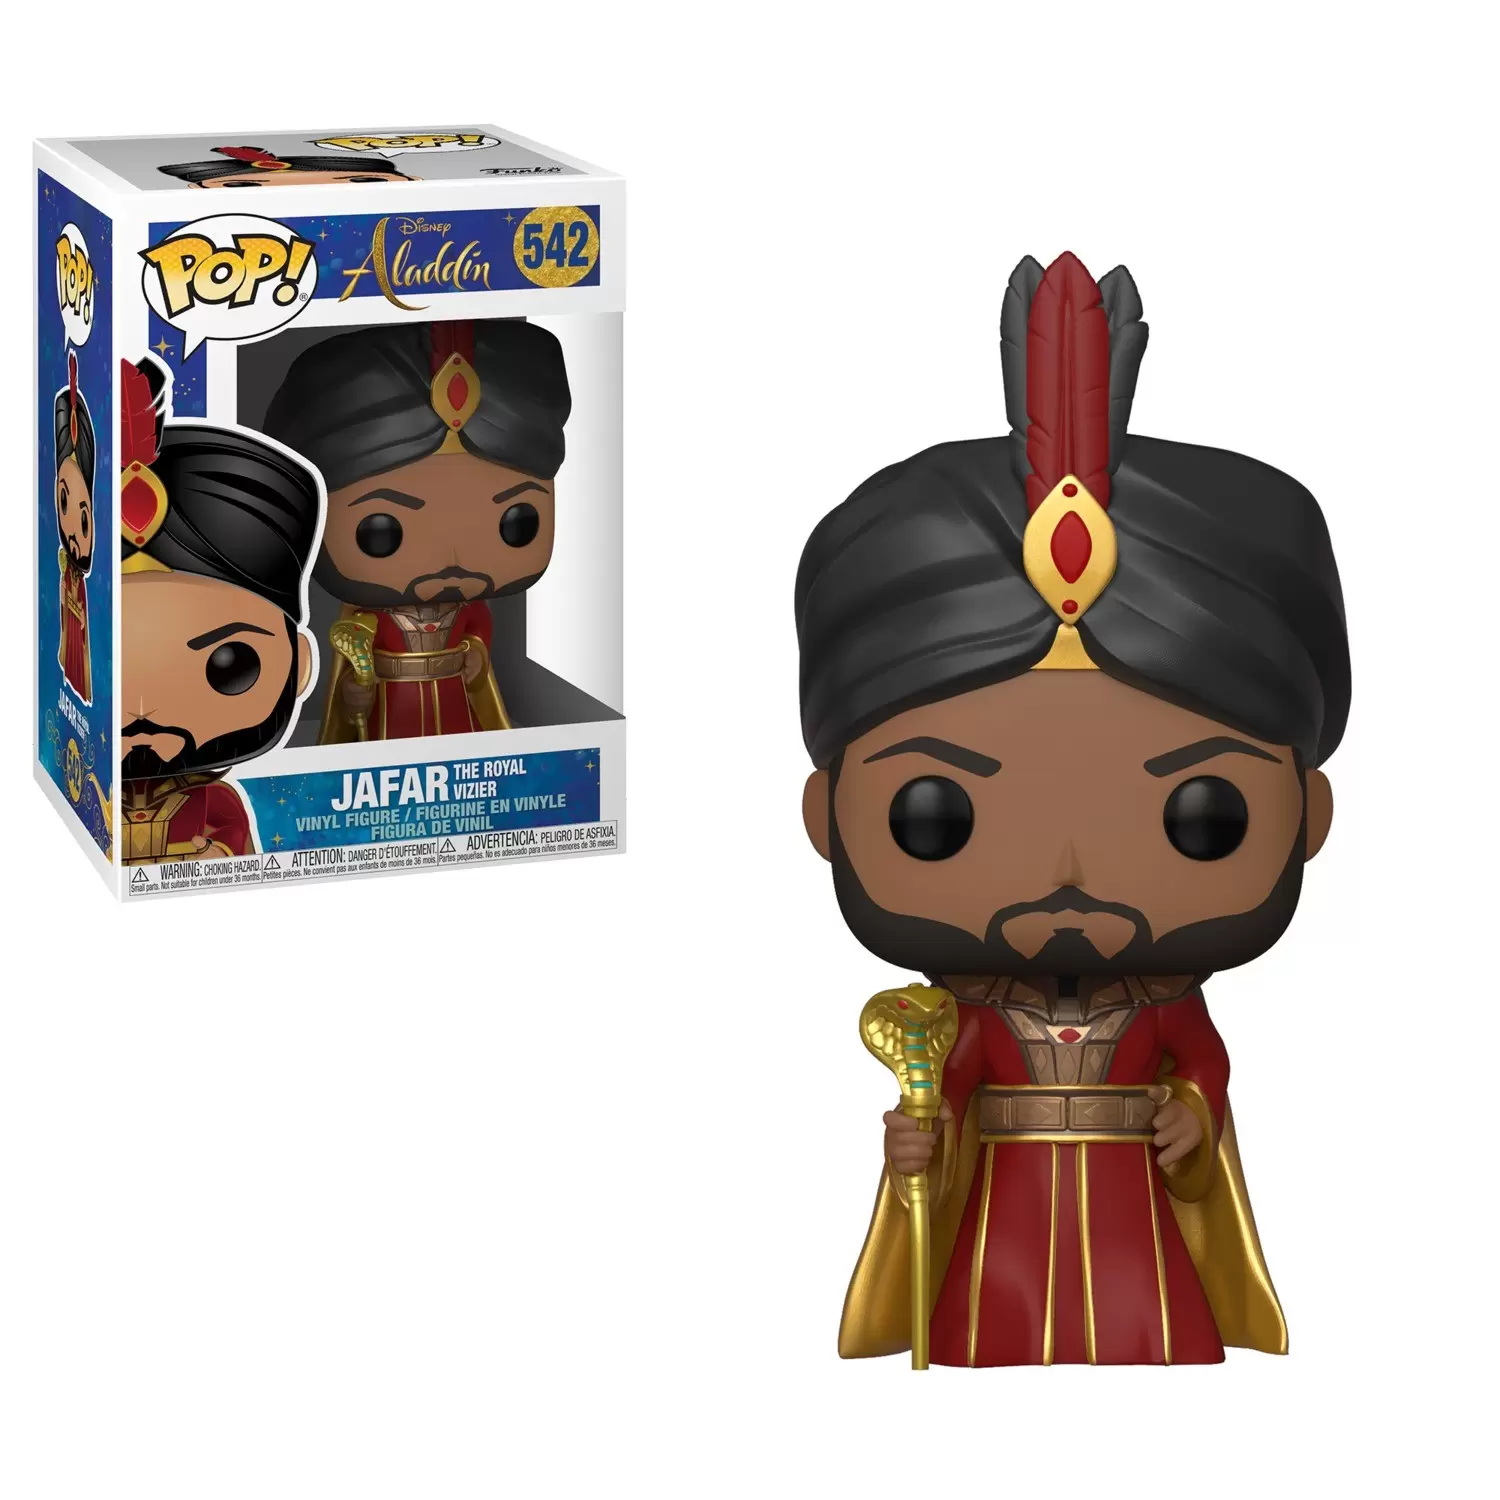 POP! Disney - Aladdin - Jafar The Royal Vizier